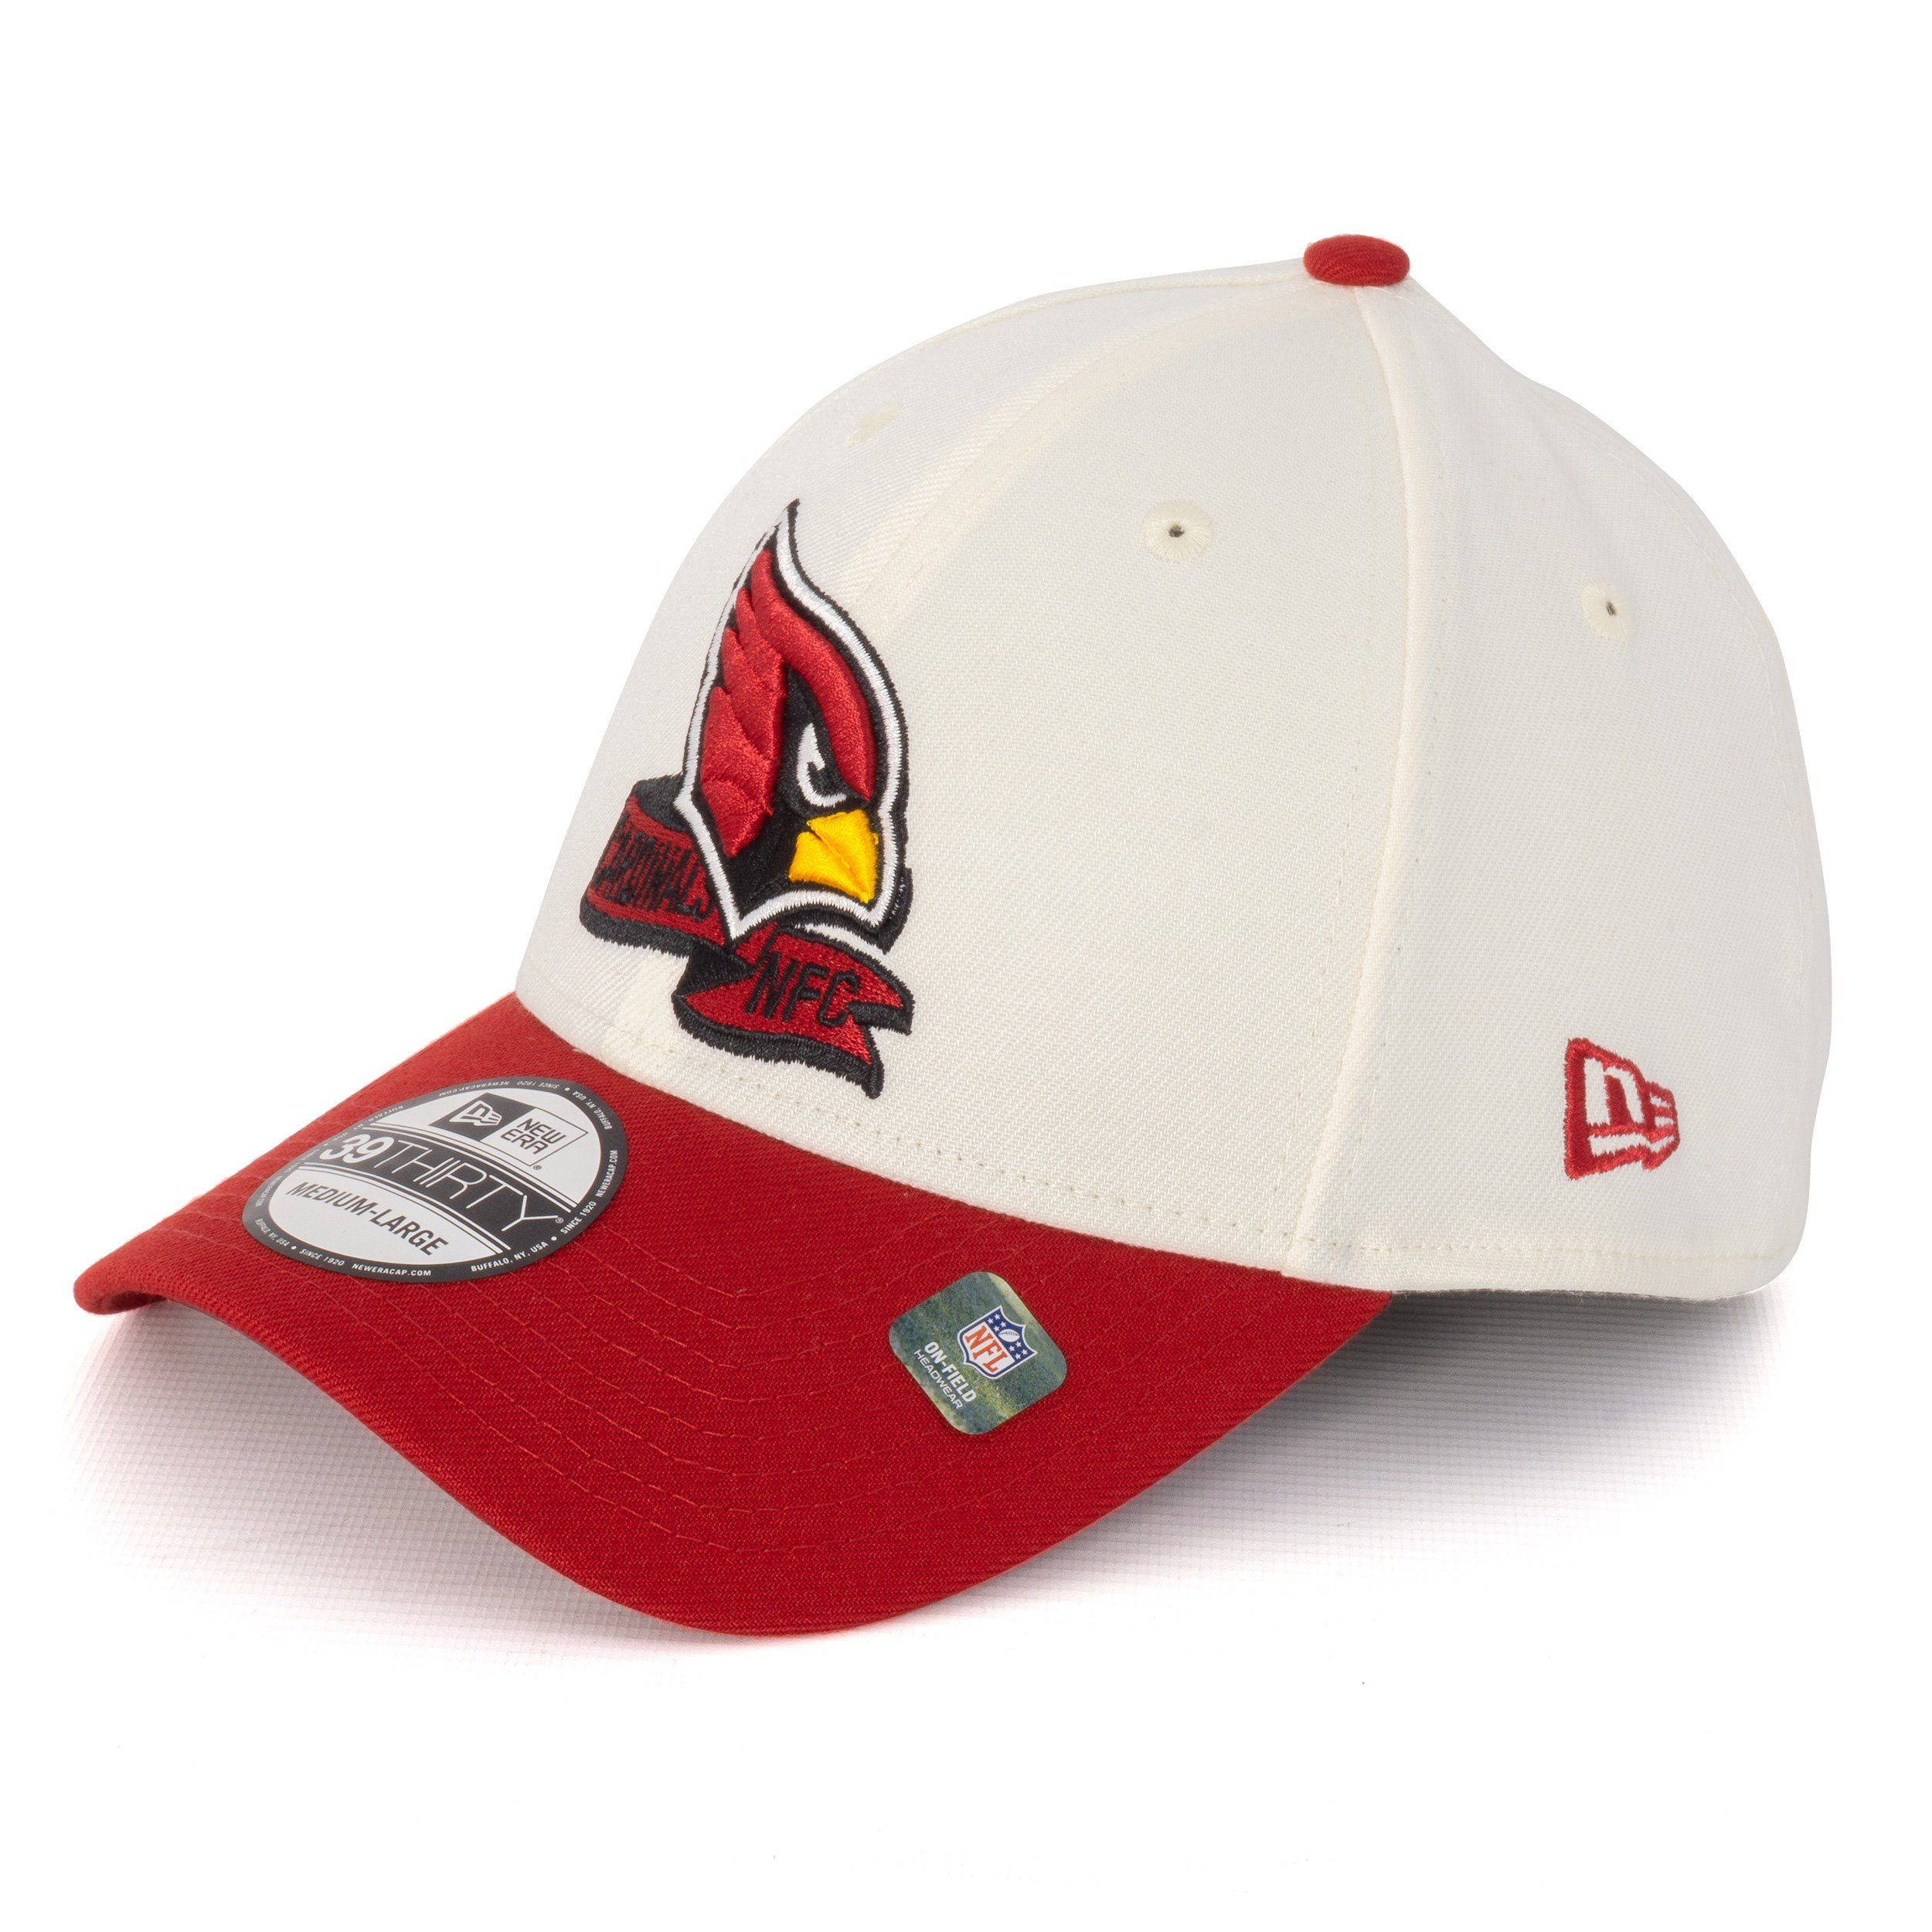 New Arizona Cardinals Baseball Cap NFL22 New Cap Era Era (1-St) 39Thirty